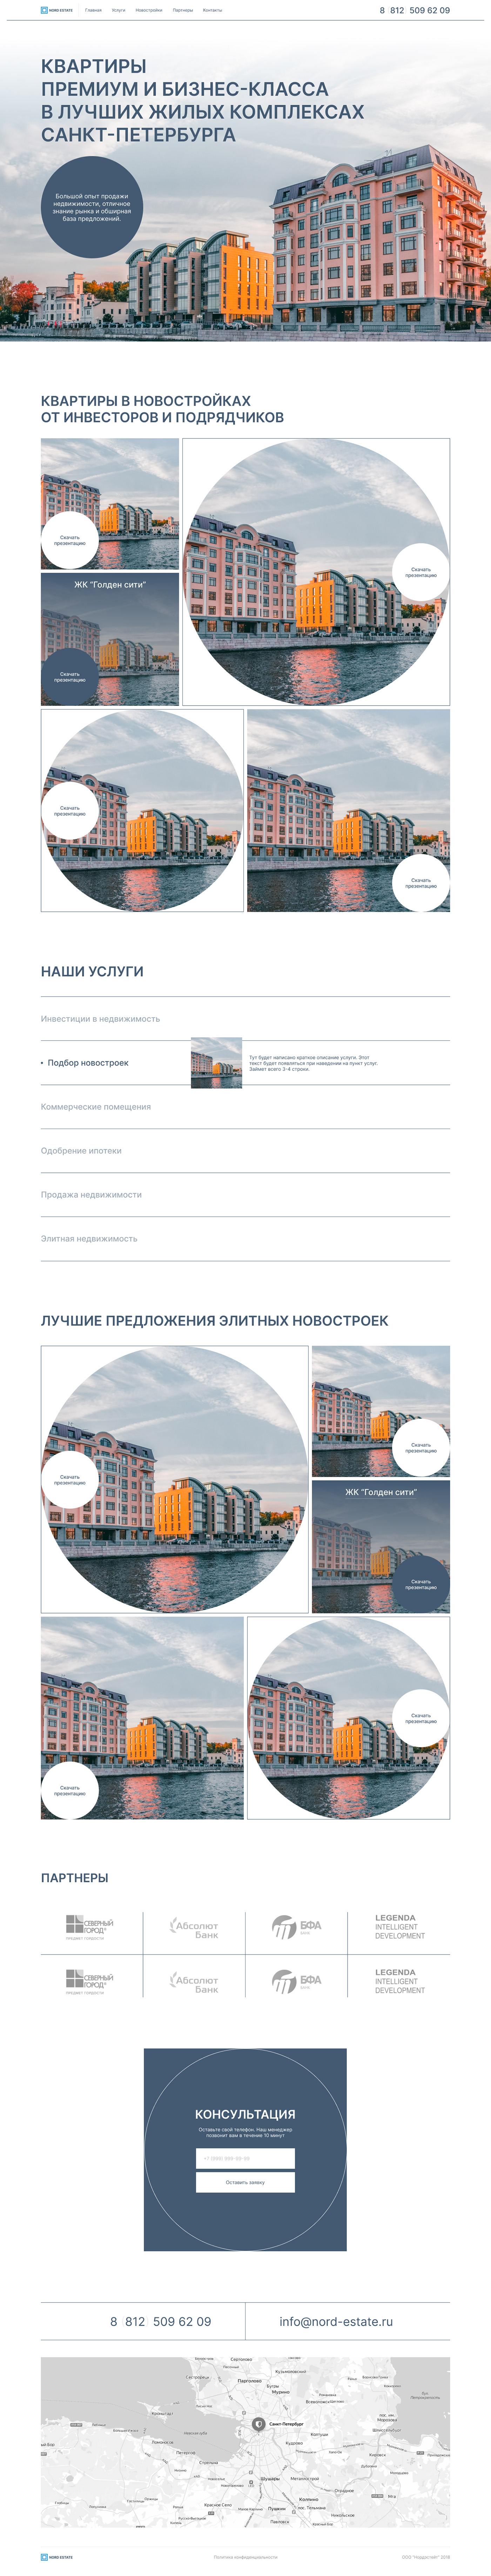 недвижимость real estate property сайт-визитка лендинг landing page Web Design  UI/UX агентство недвижимости санкт-петербург